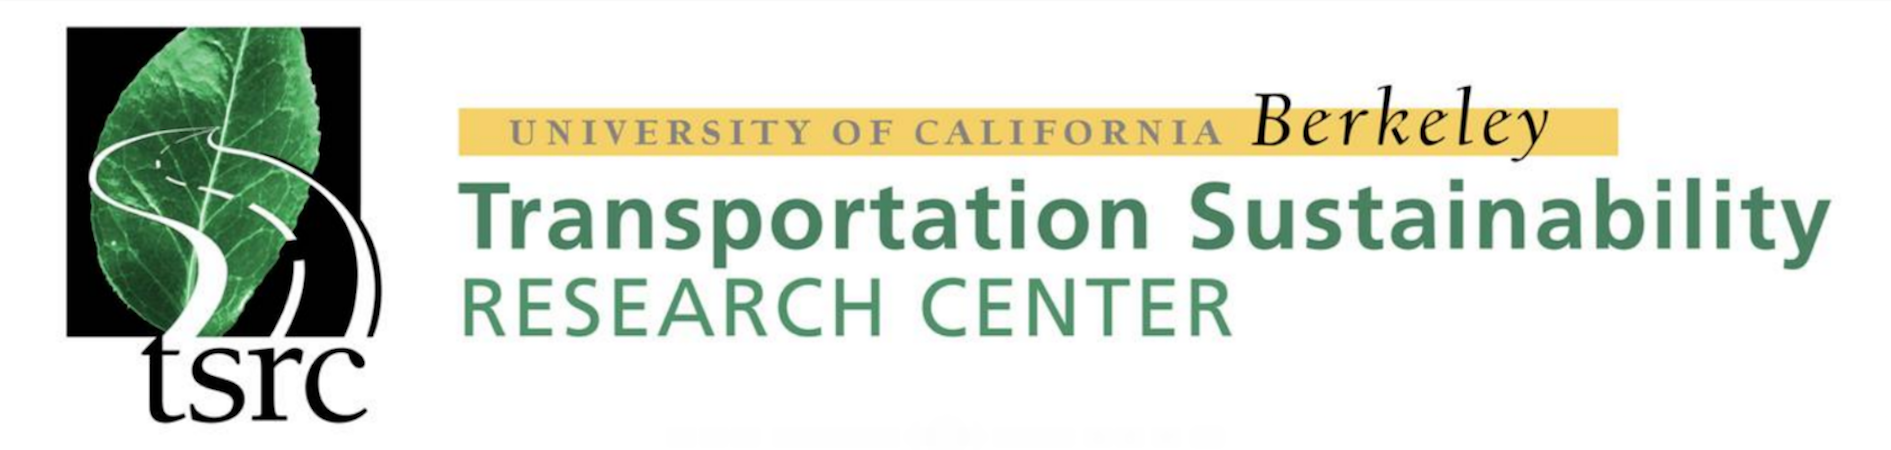 UC Berkeley Transportation Sustainability Research Center logo